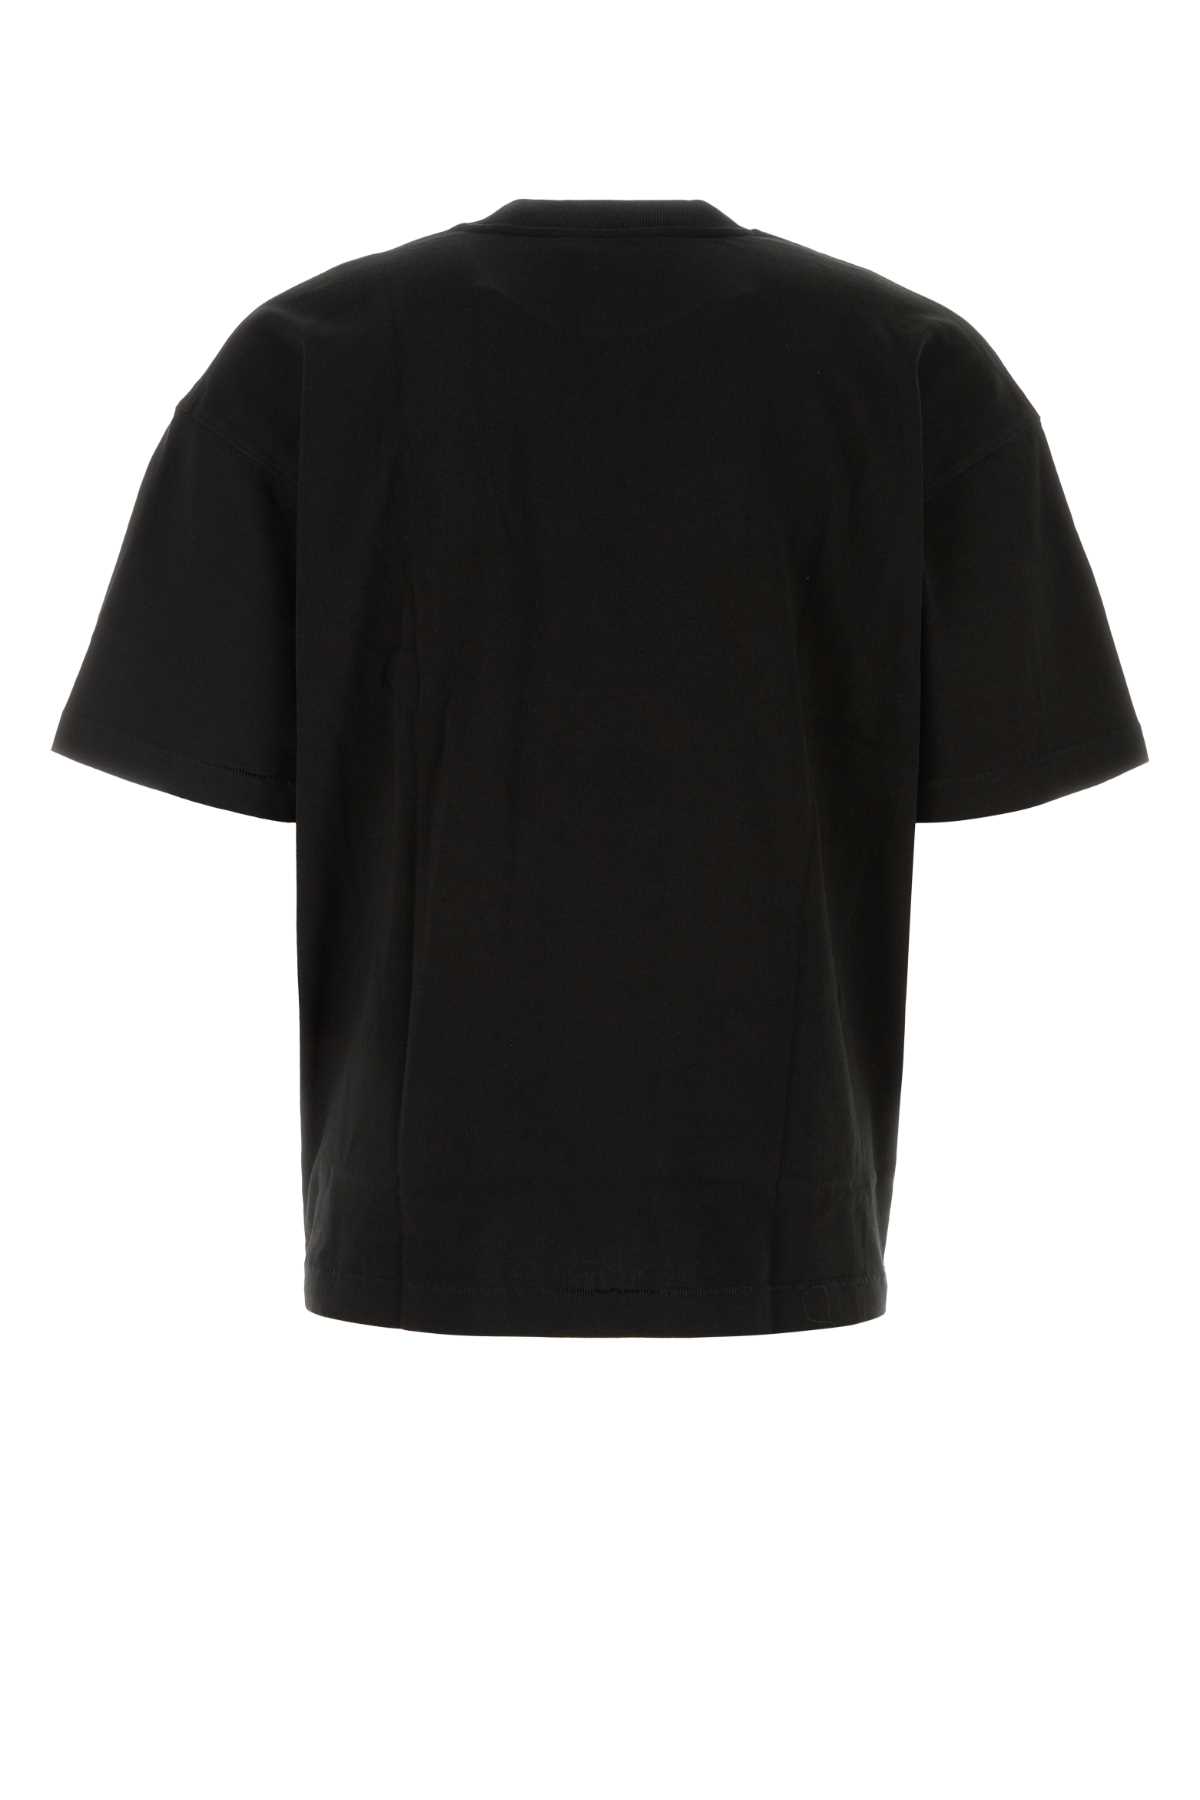 1989 Studio Black Cotton Oversize T-shirt